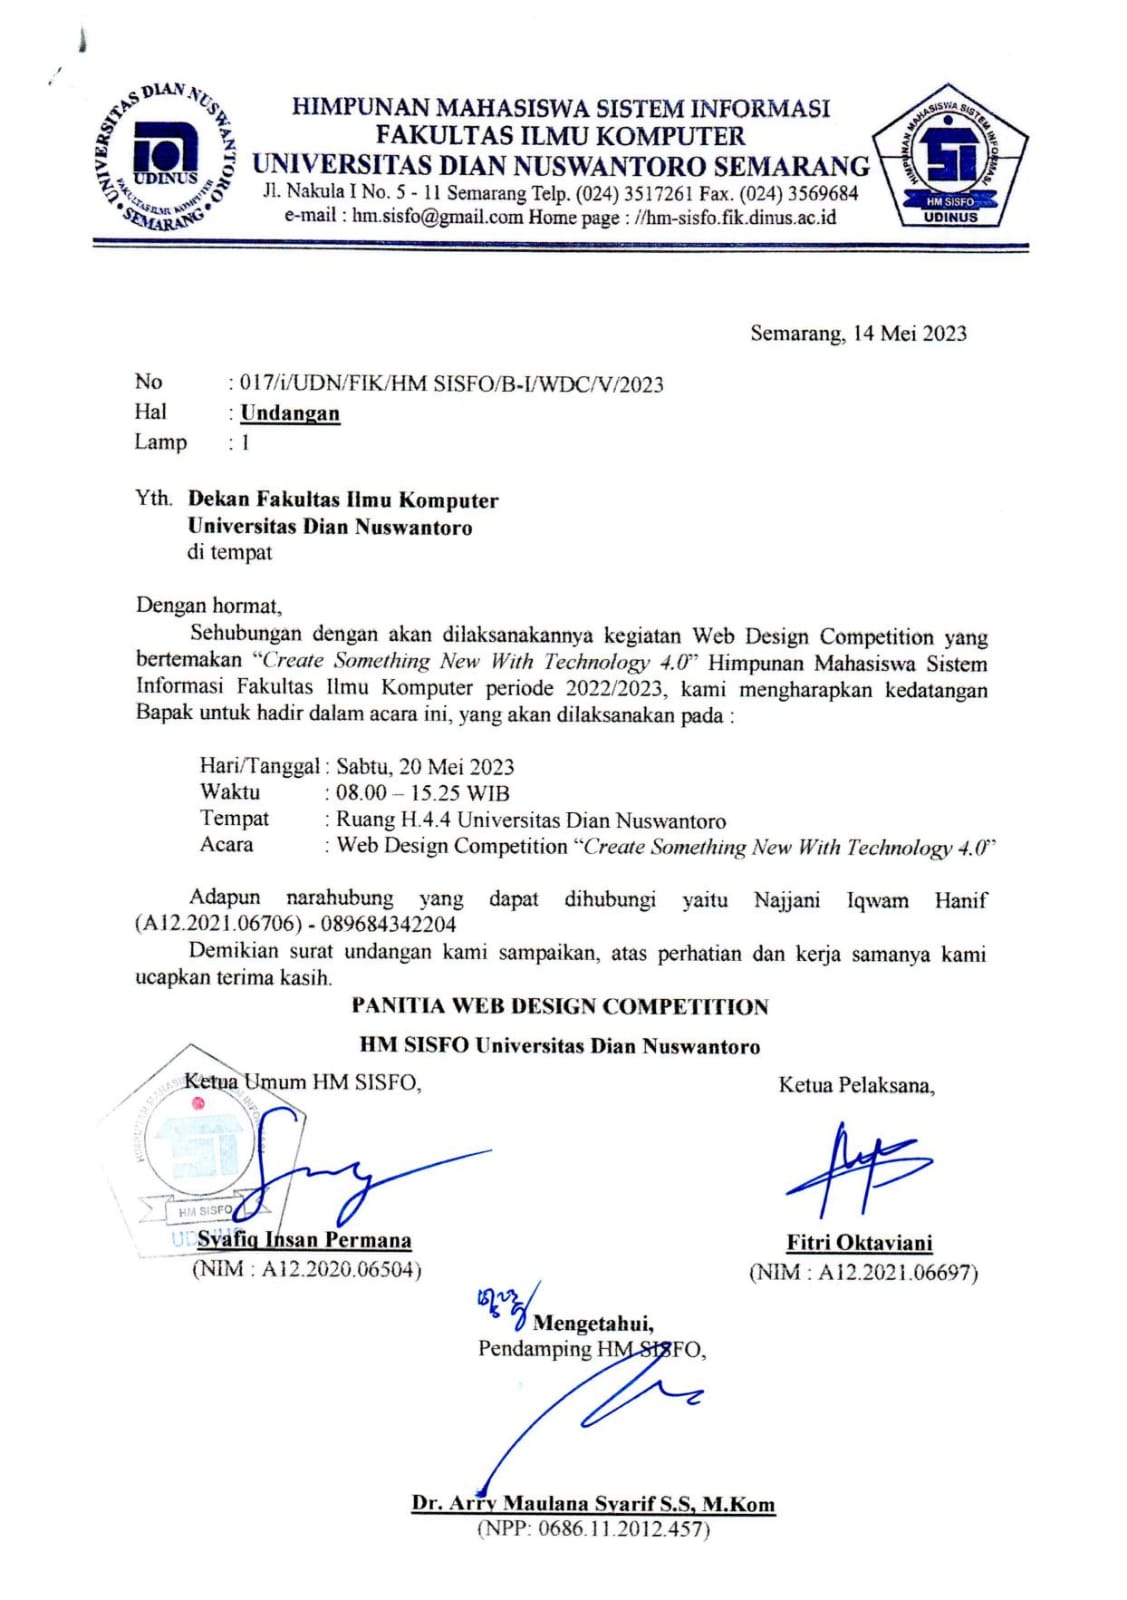 Surat Undangan Dekan Fakultas Ilmu Komputer Universitas Dian Nuswantoro